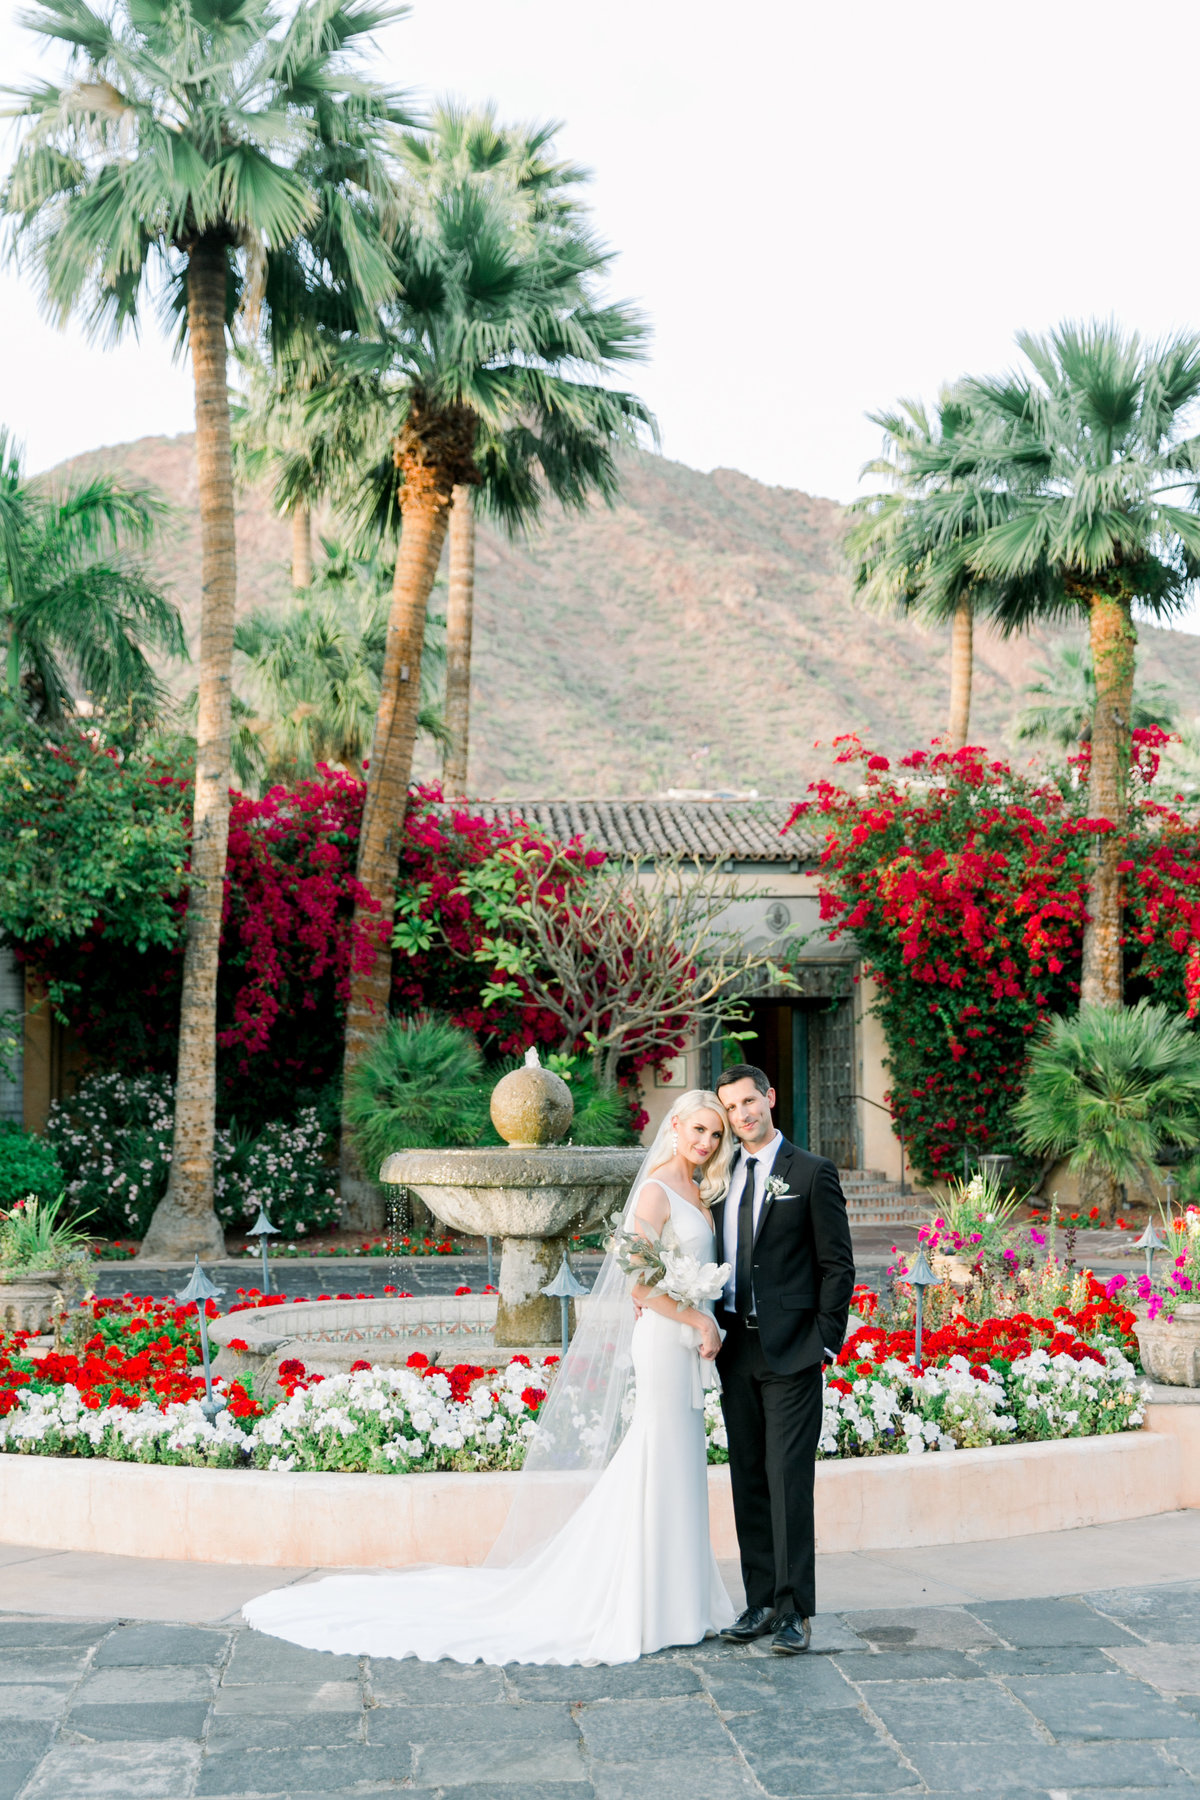 Karlie Colleen Photography - The Royal Palms - Arizona Wedding - Alex & Alex-570